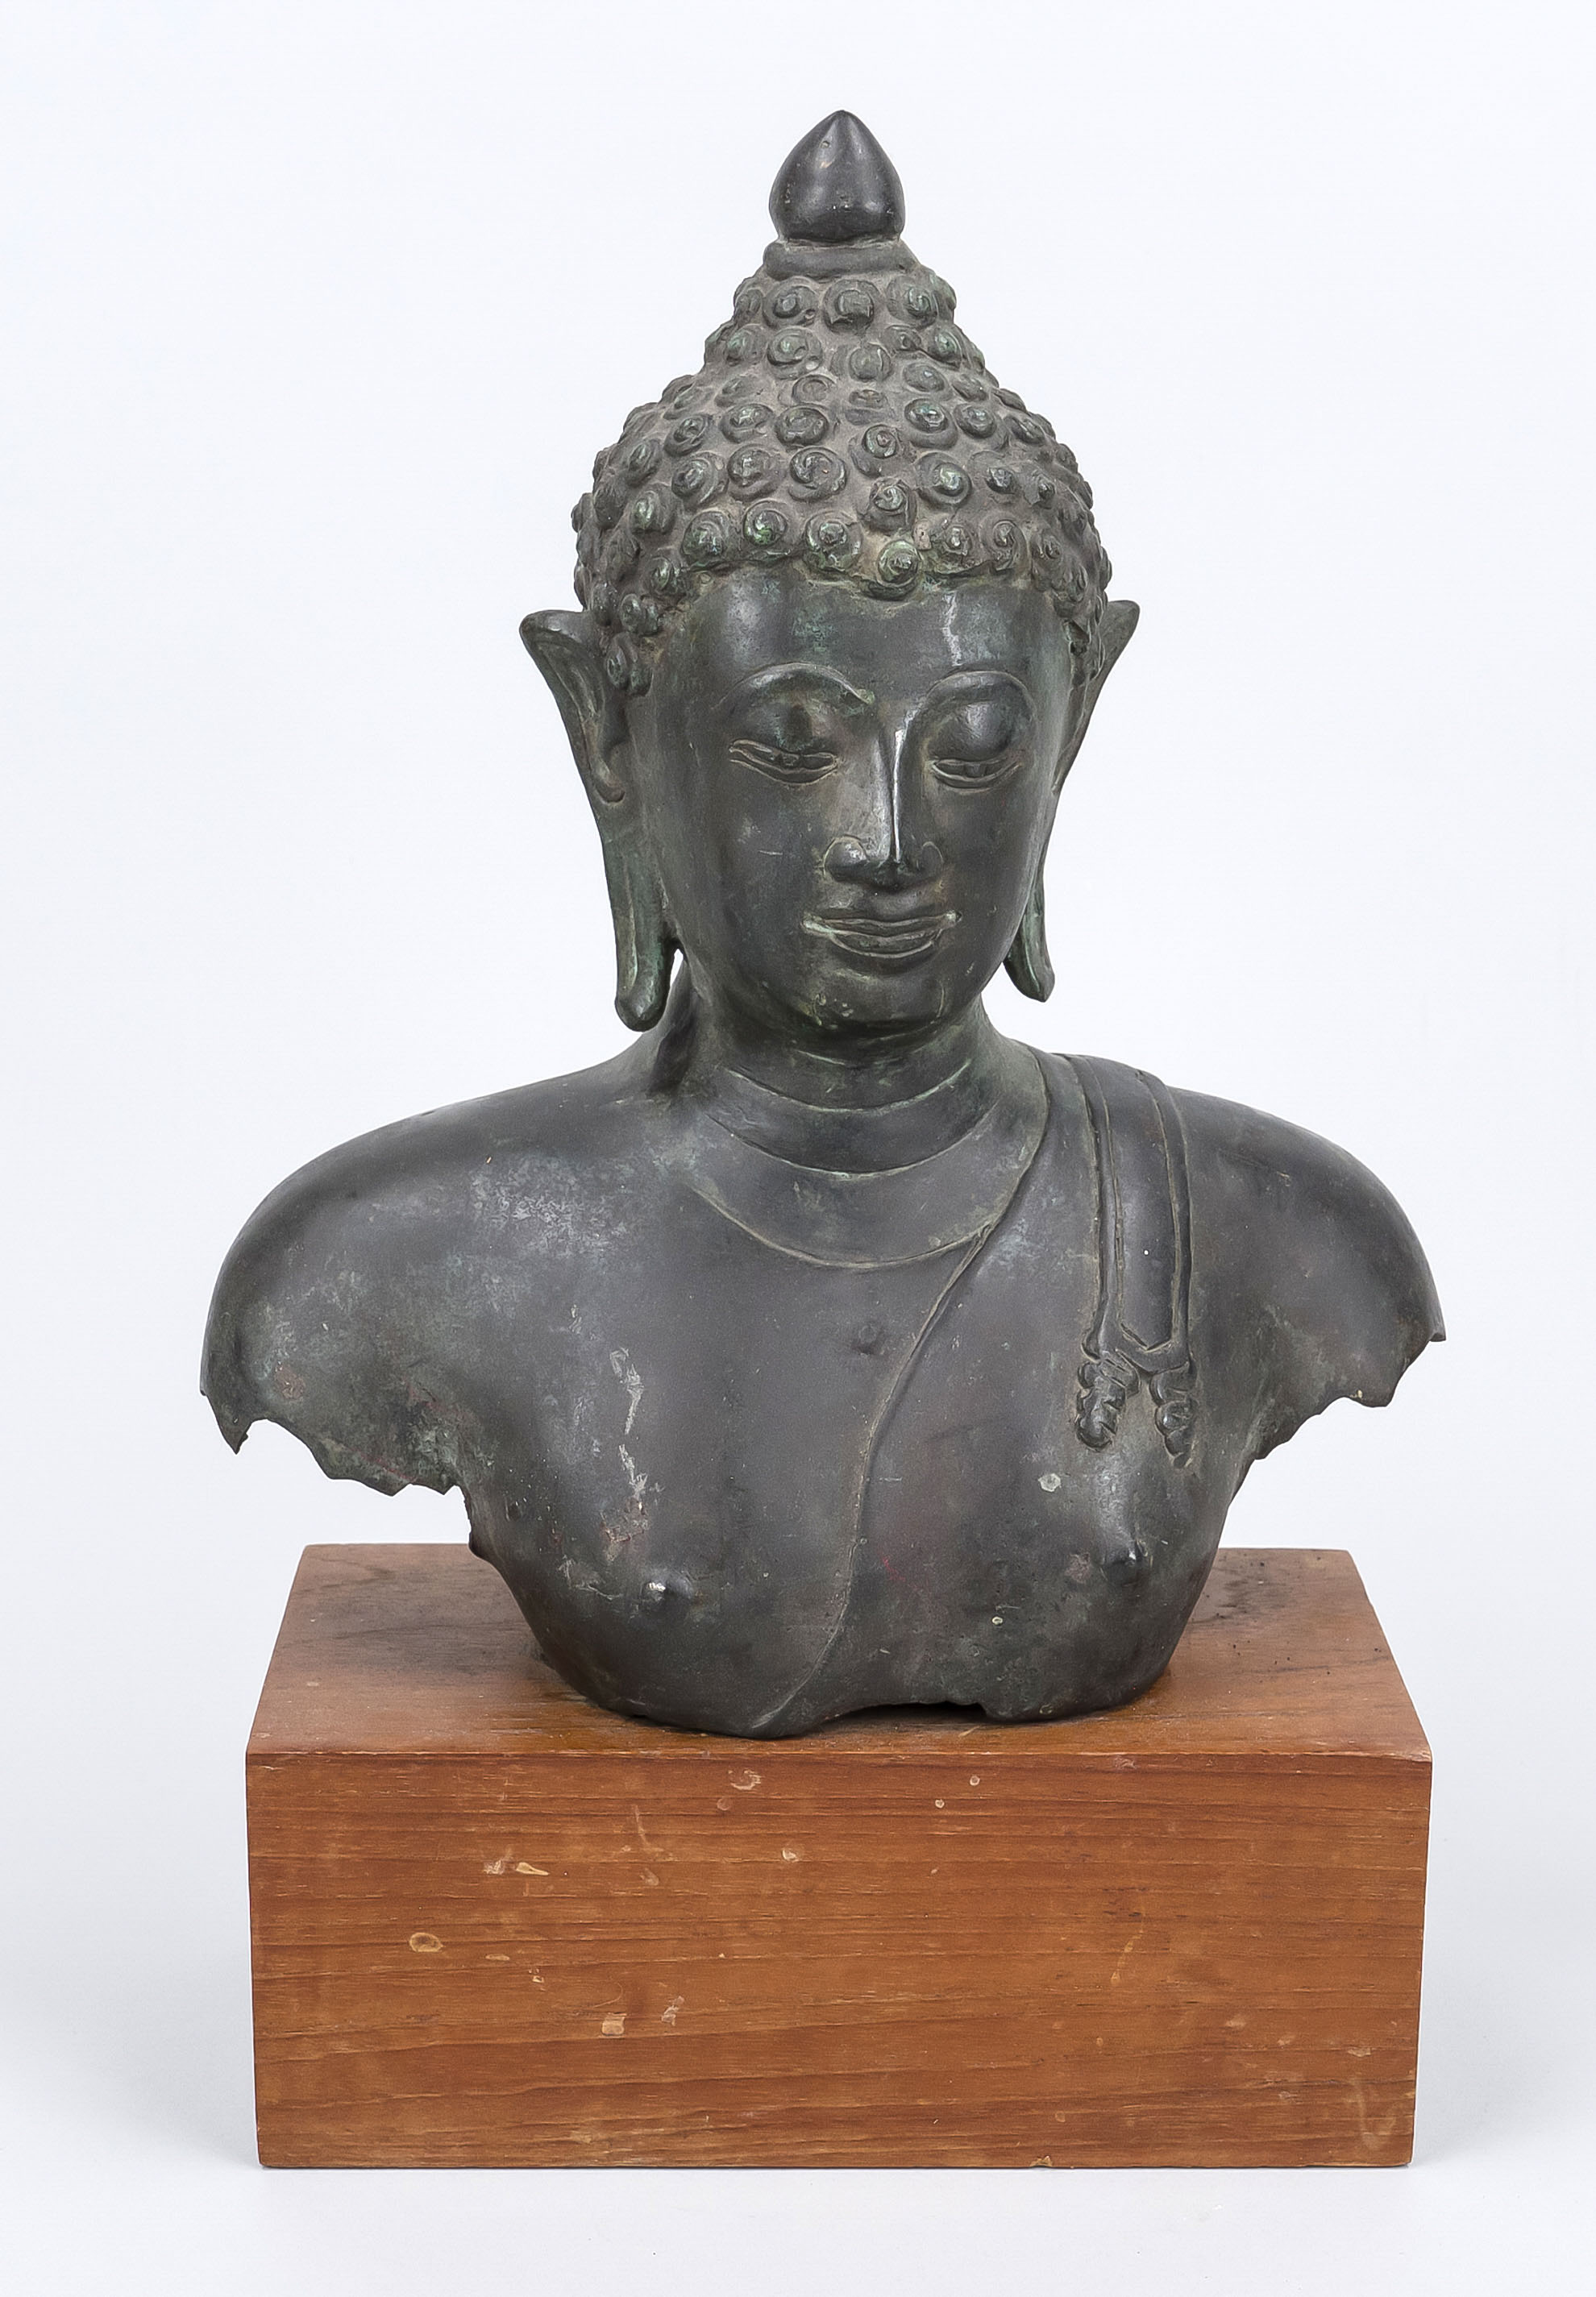 Buddha bust/fragment, exact age and origin uncertain, bronze. Mounted on a rectangular wooden